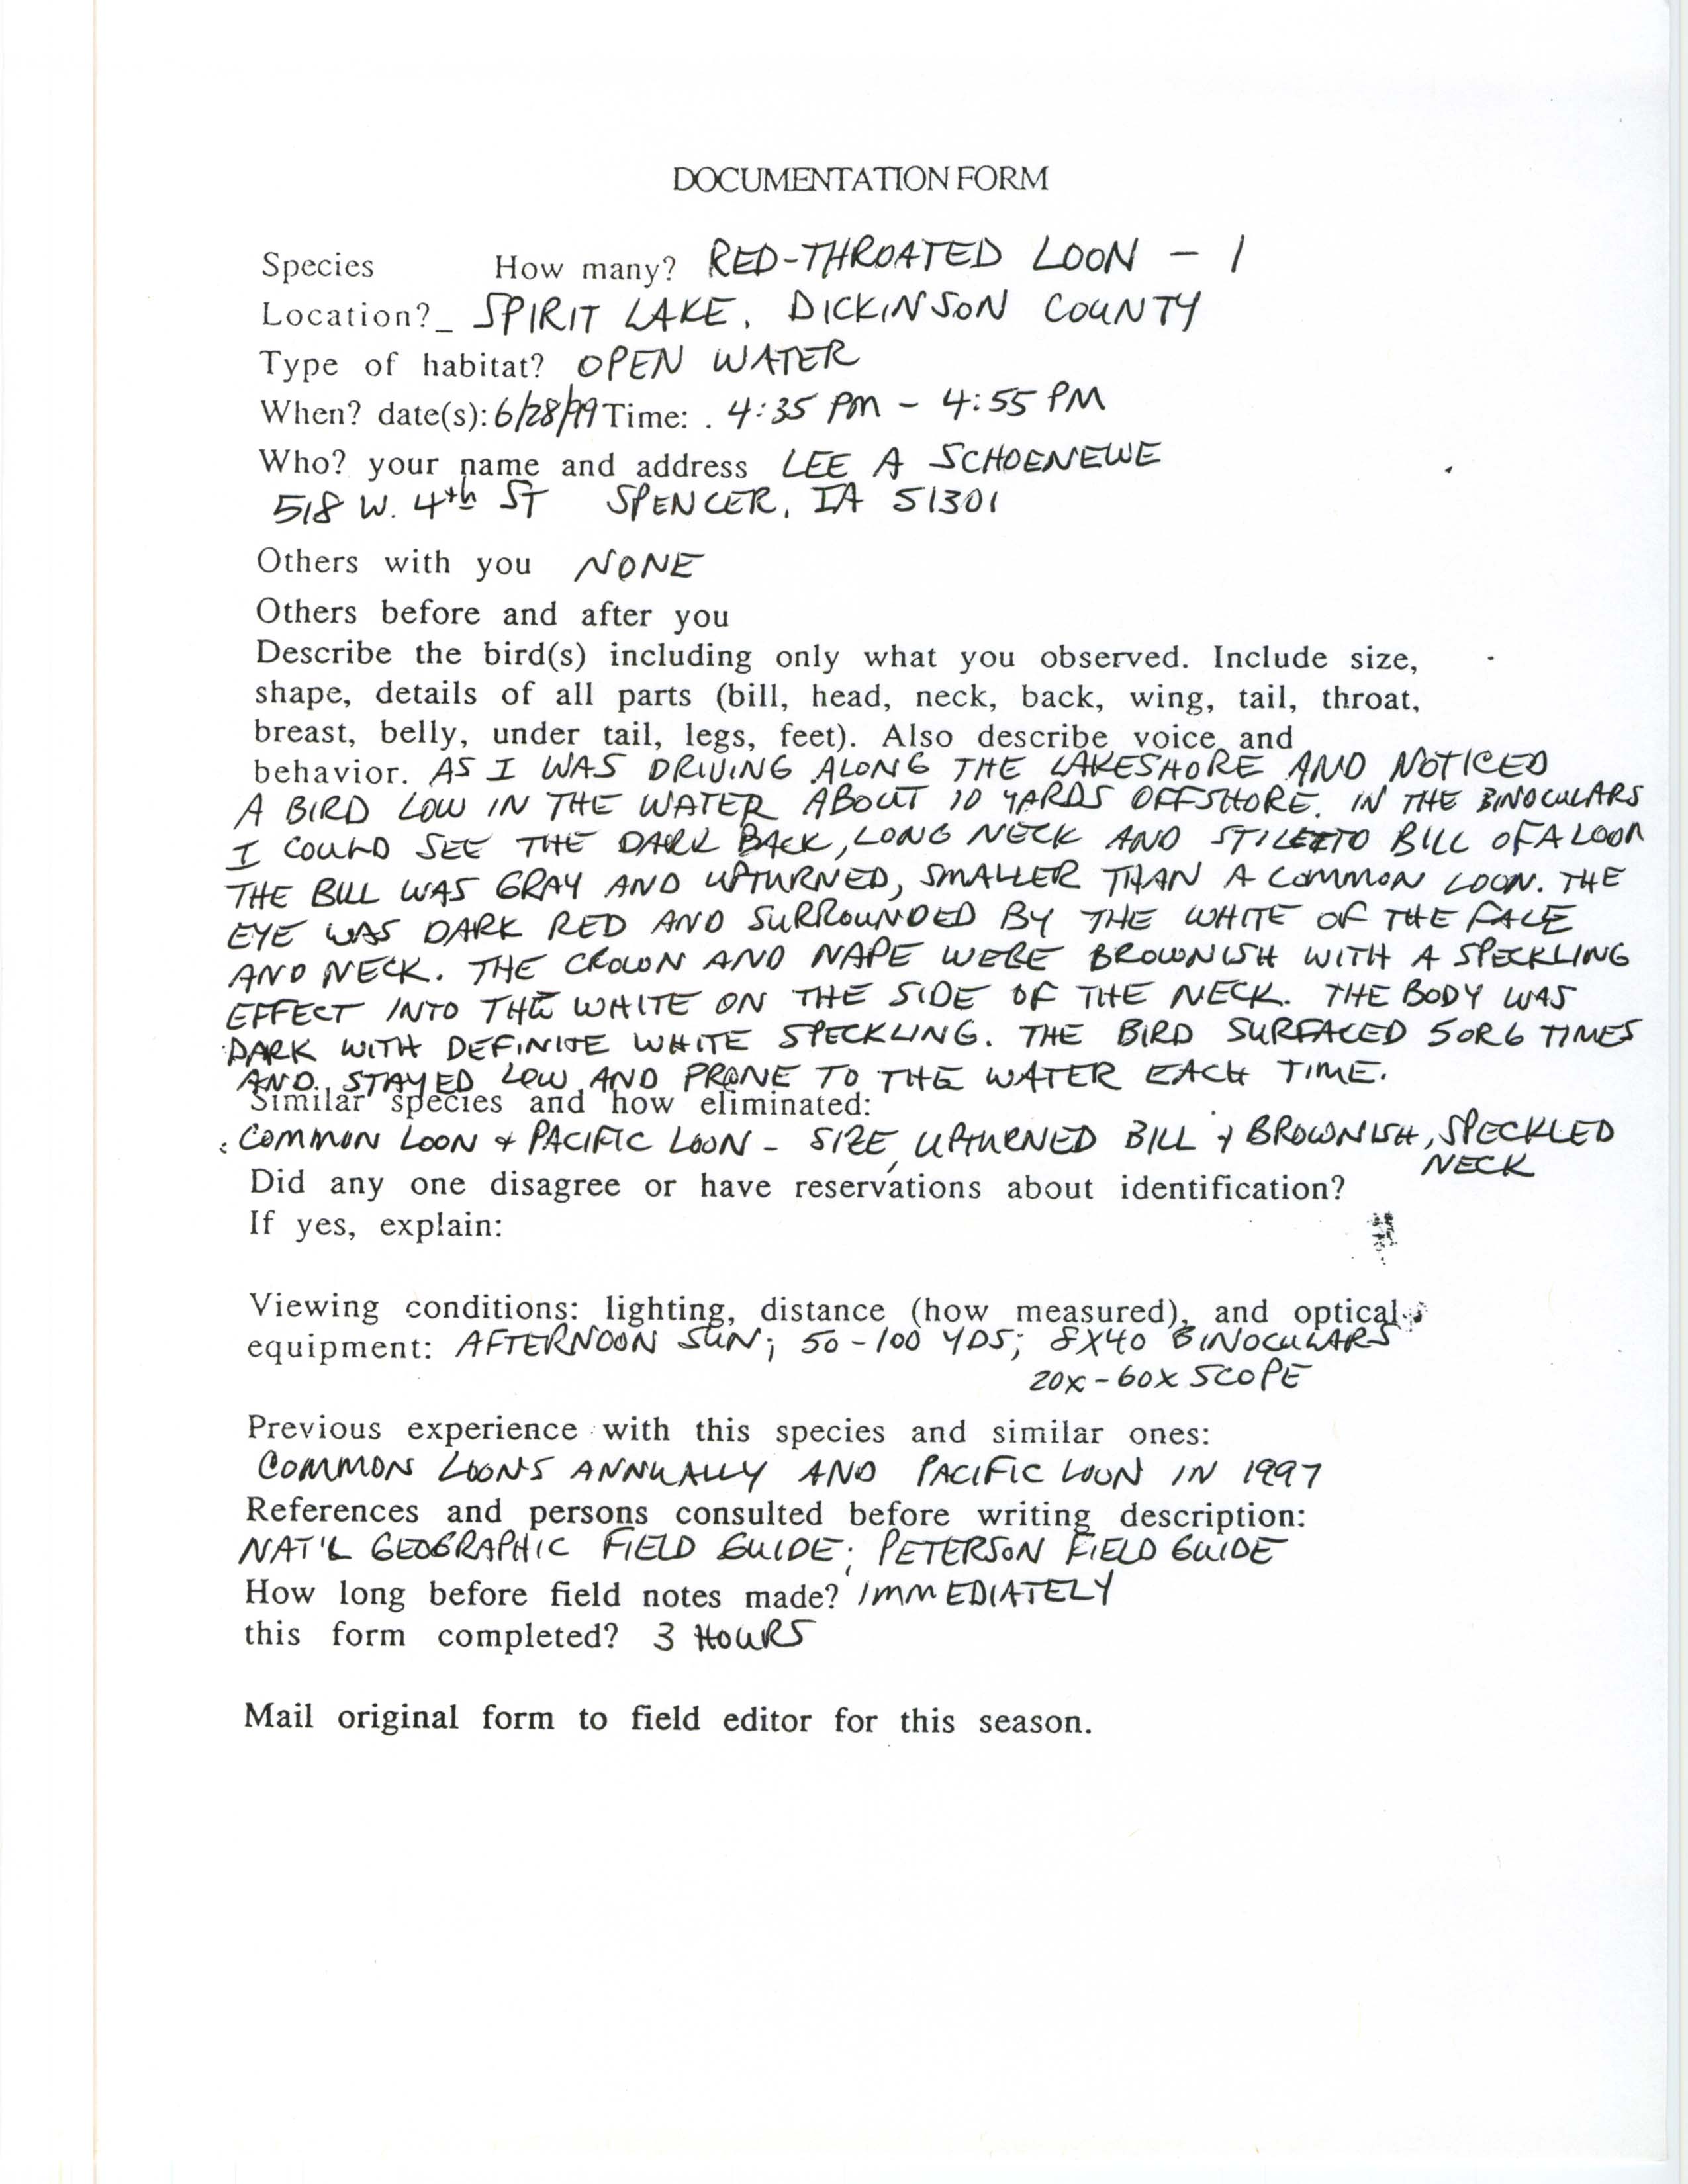 Documentation form, Red-throated Loon, June 28, 1999, Lee Schoenewe